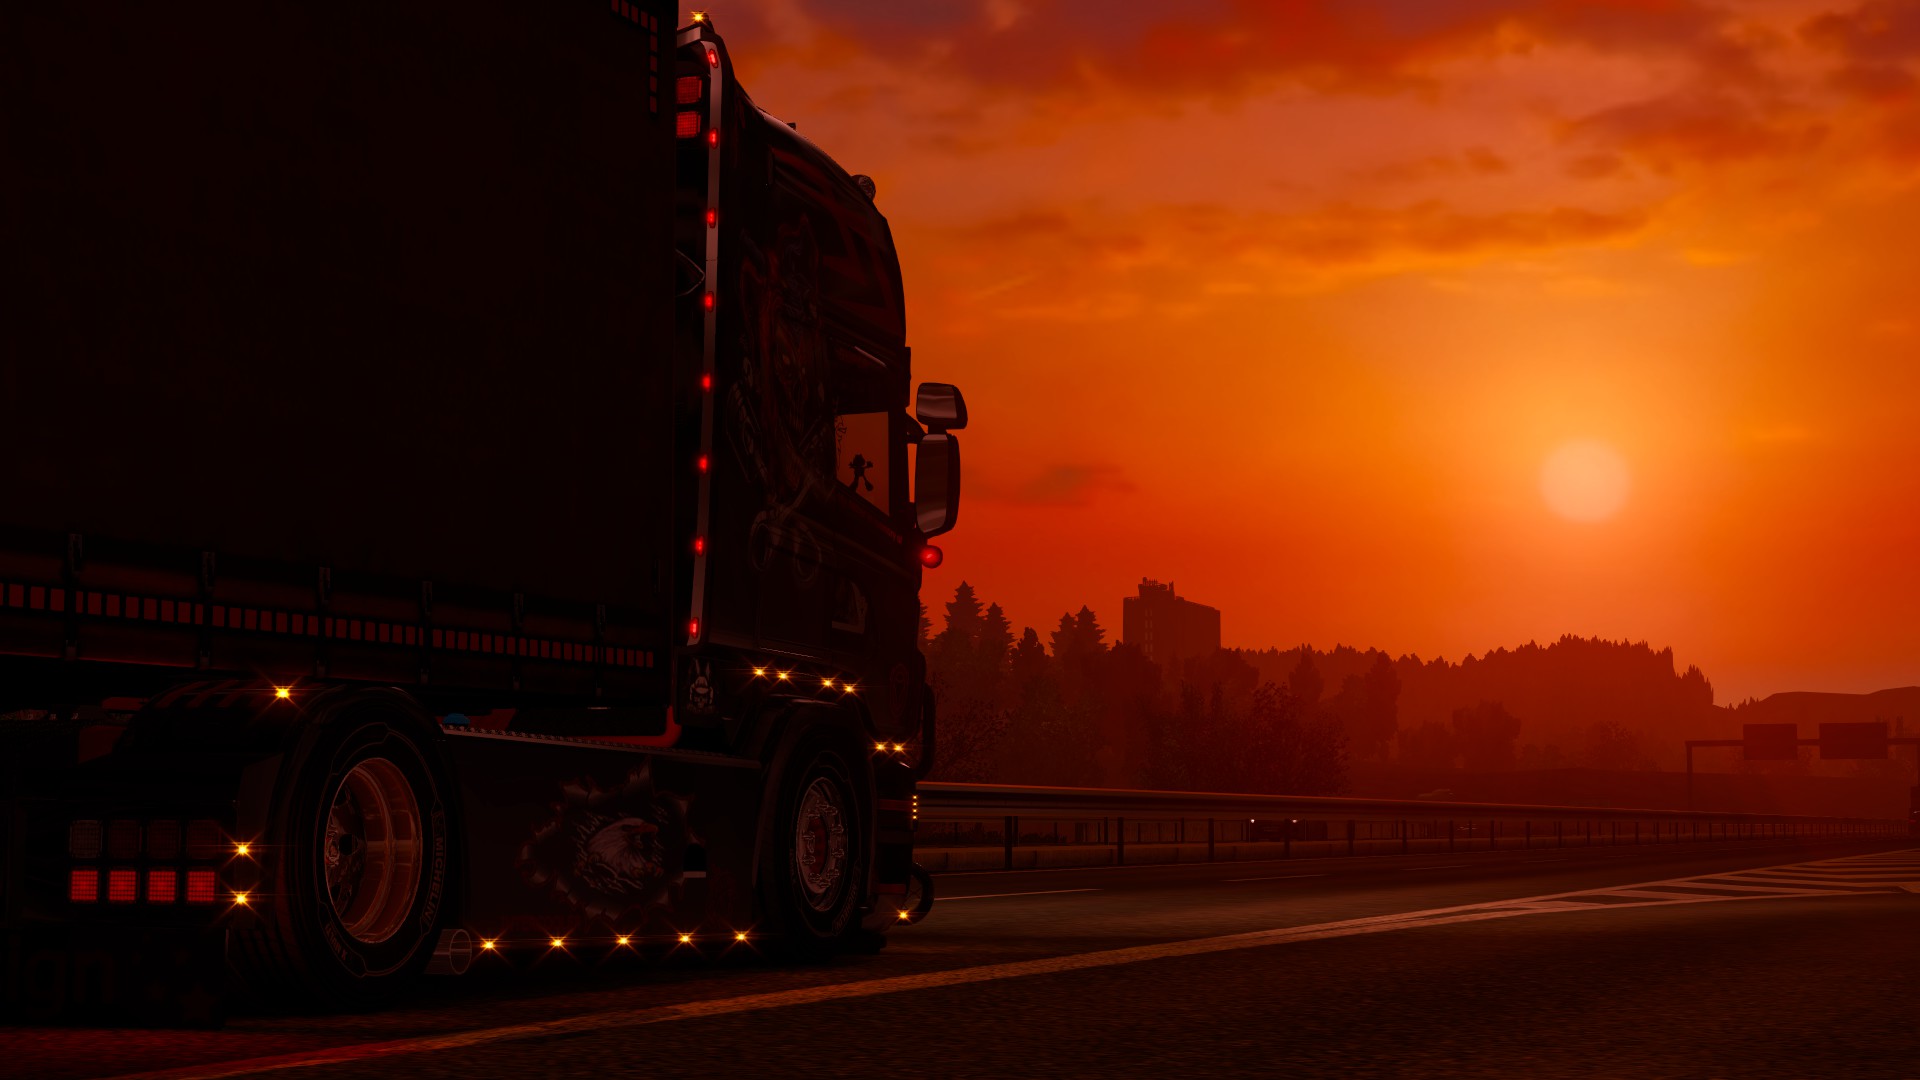 euro truck simulator 2 review ign